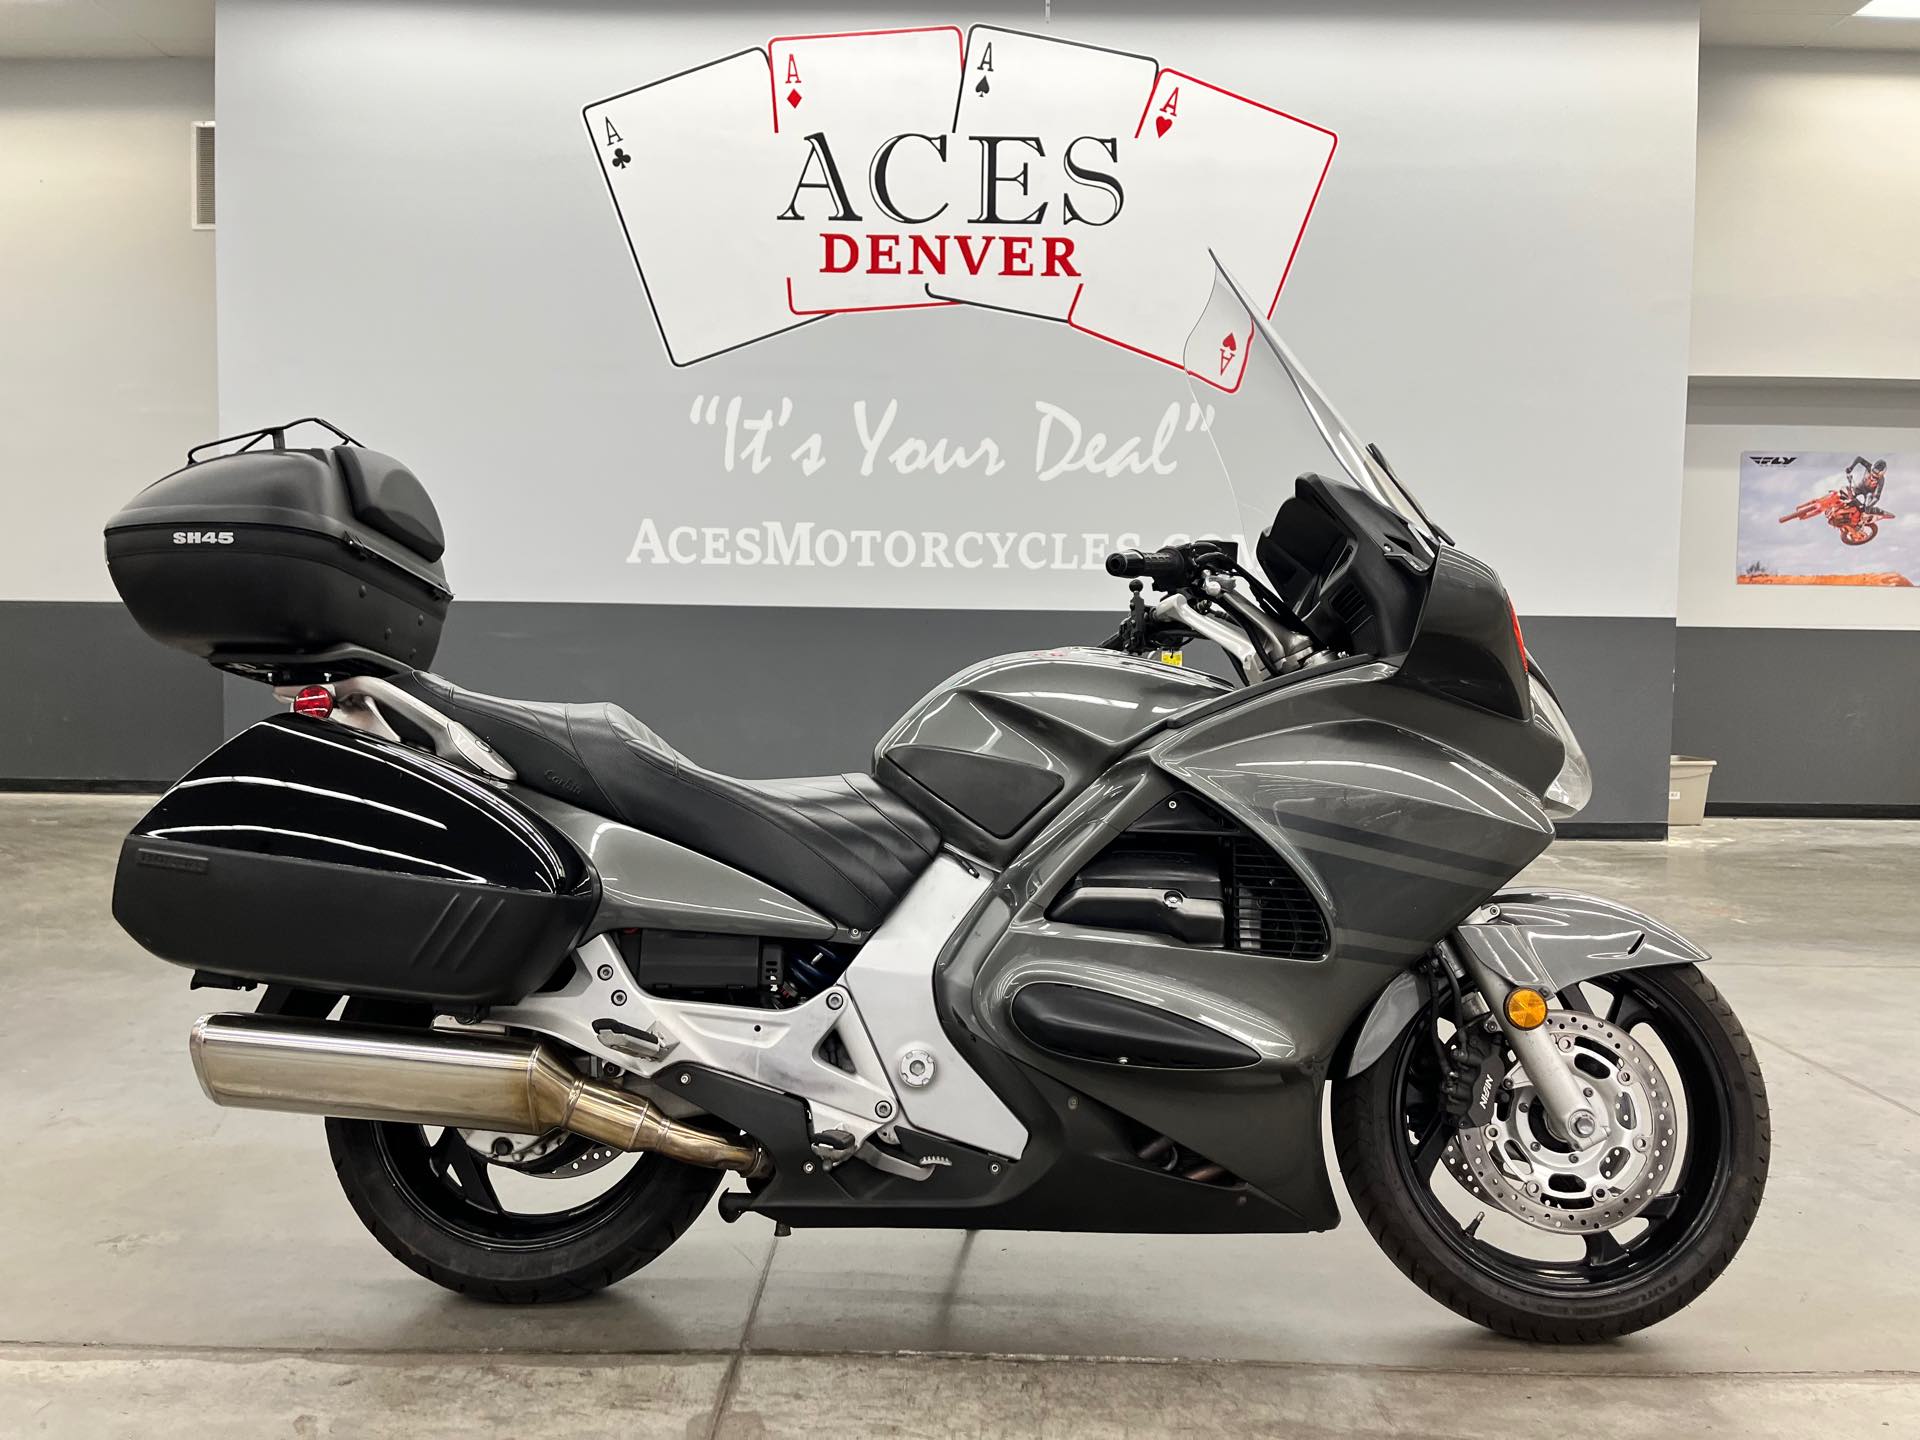 2003 HONDA ST1300 at Aces Motorcycles - Denver